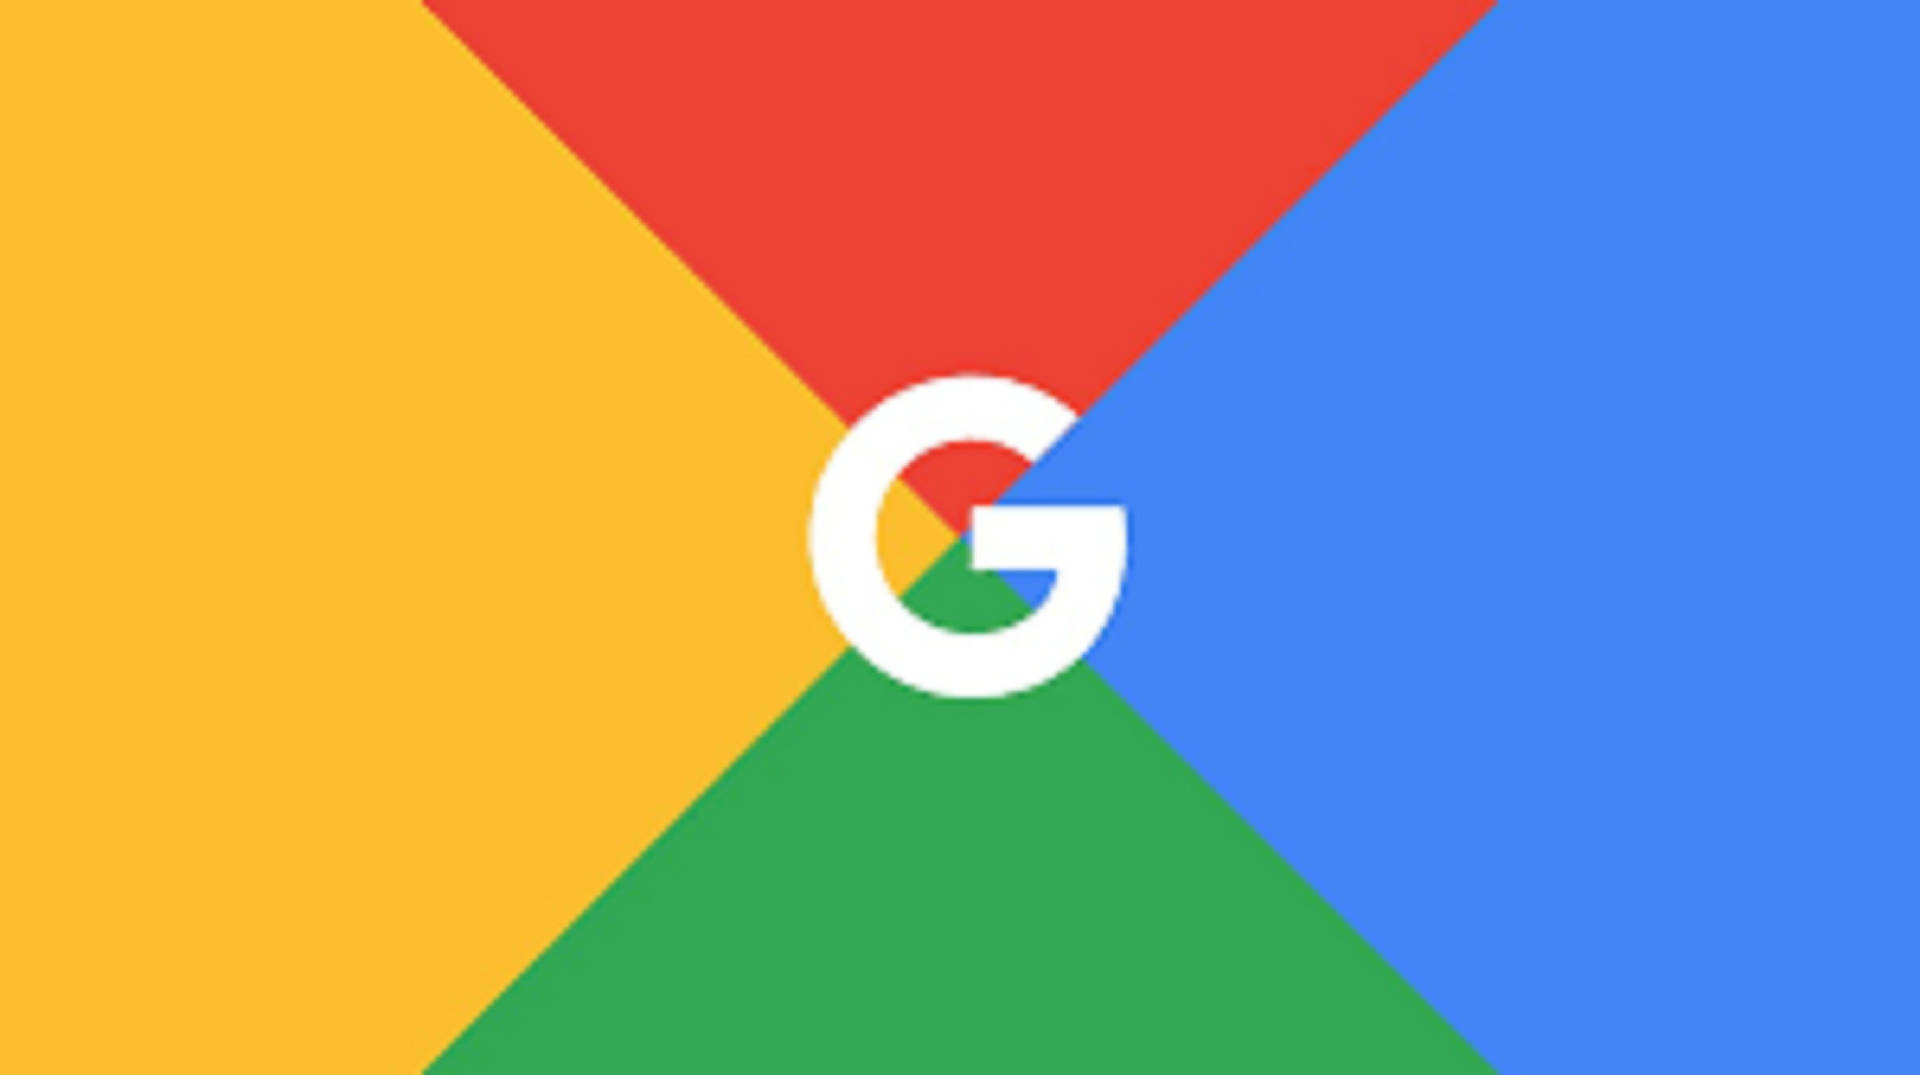 Google Logo And Color Branding Background